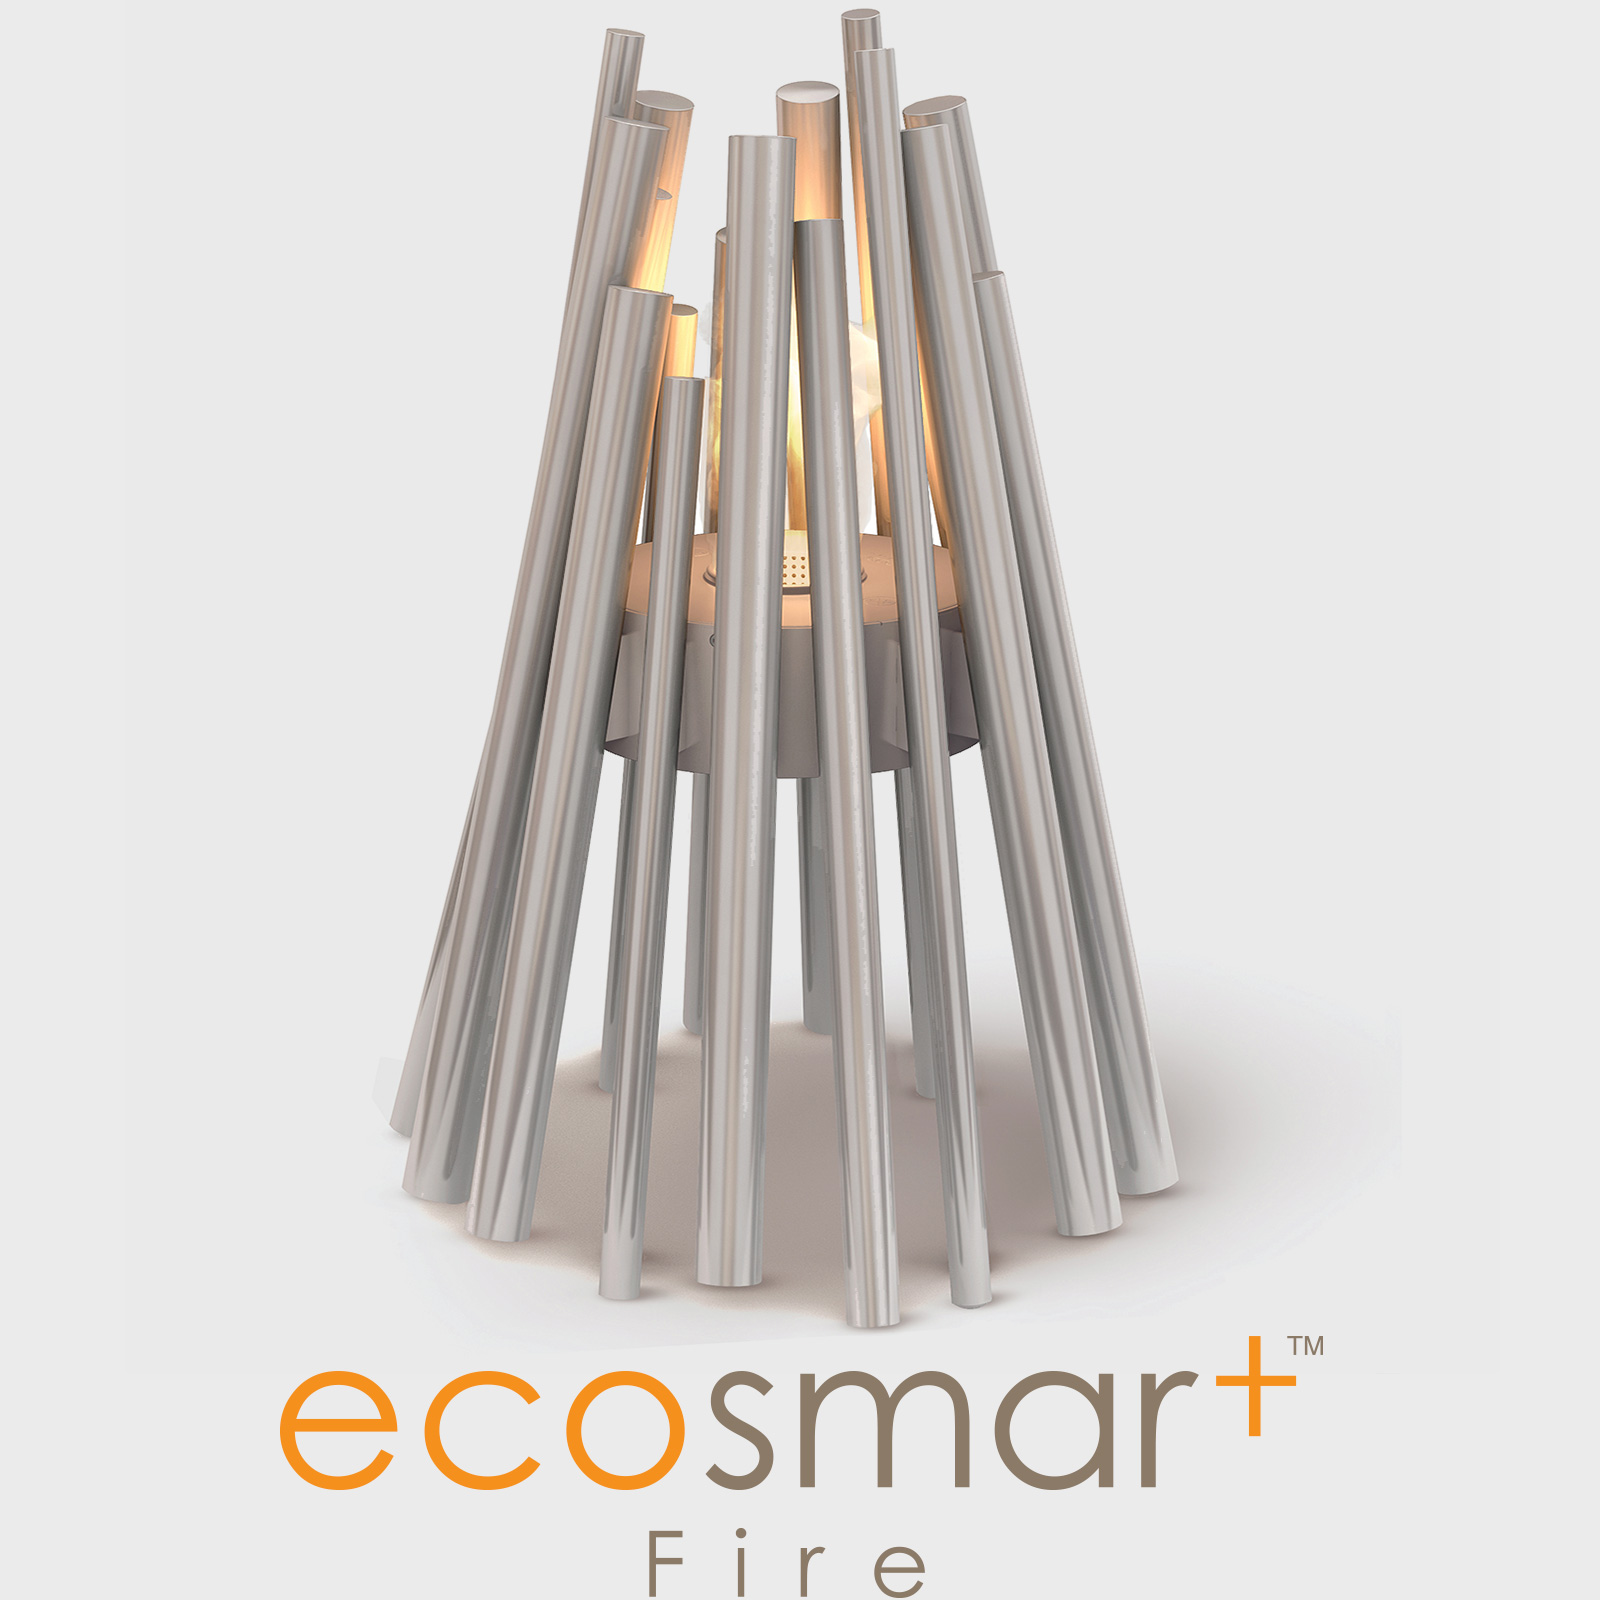 Ecosmart Stix Fire Pits Fireplace, Fire Pit Sticks